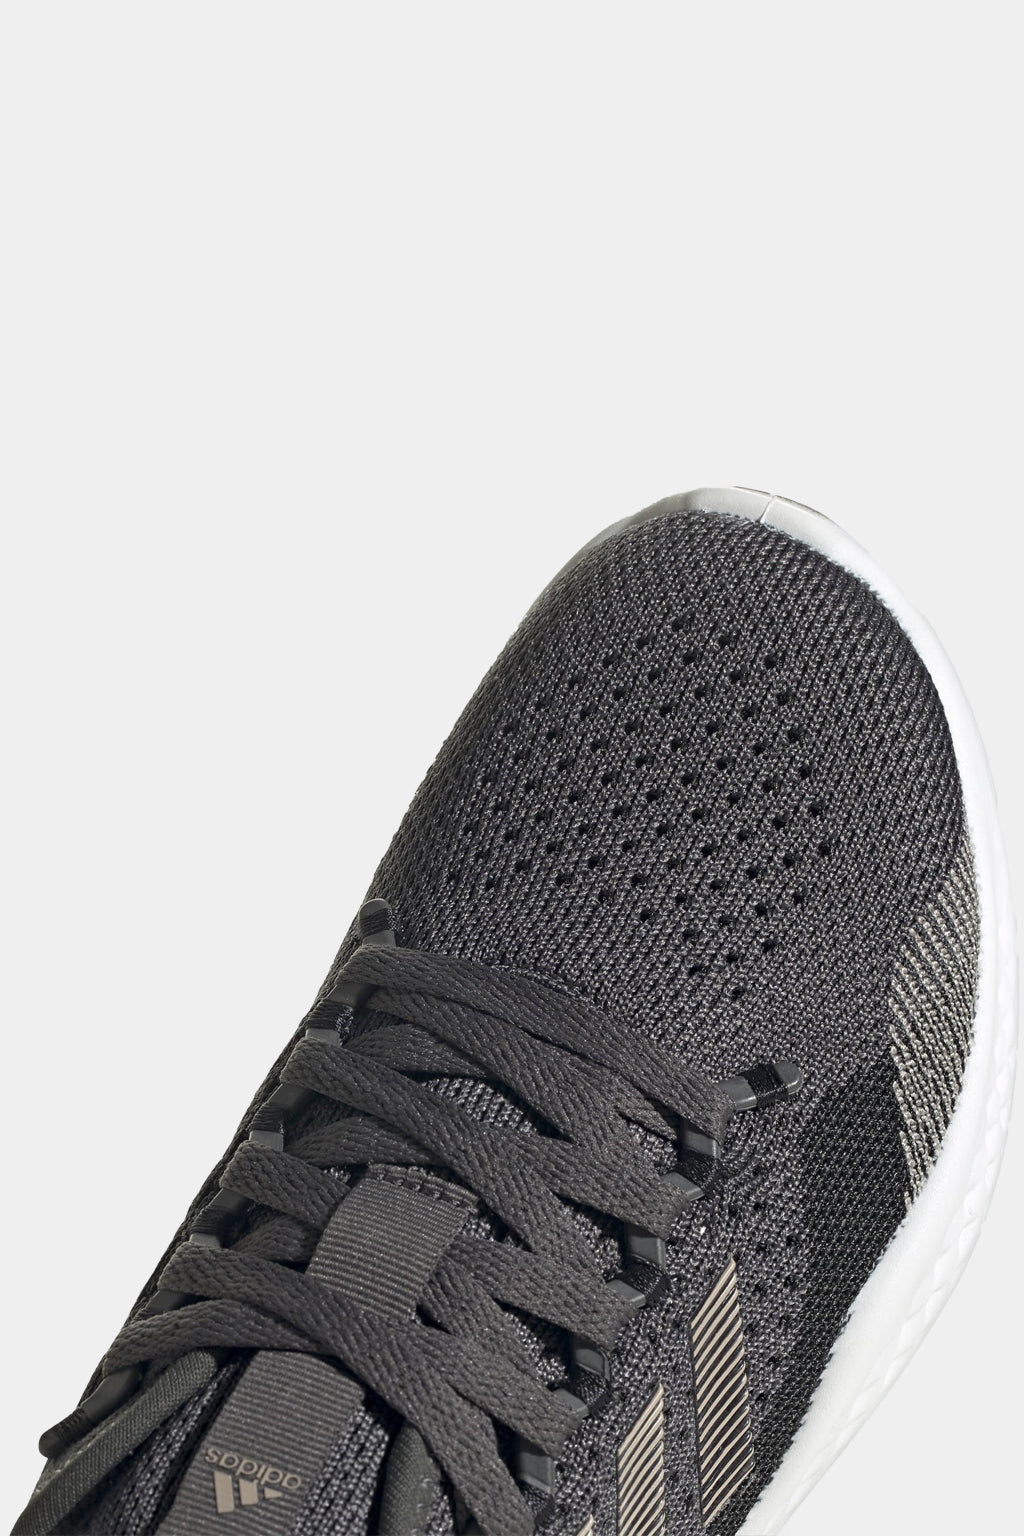 Adidas - Fluidflow 2.0 Shoes